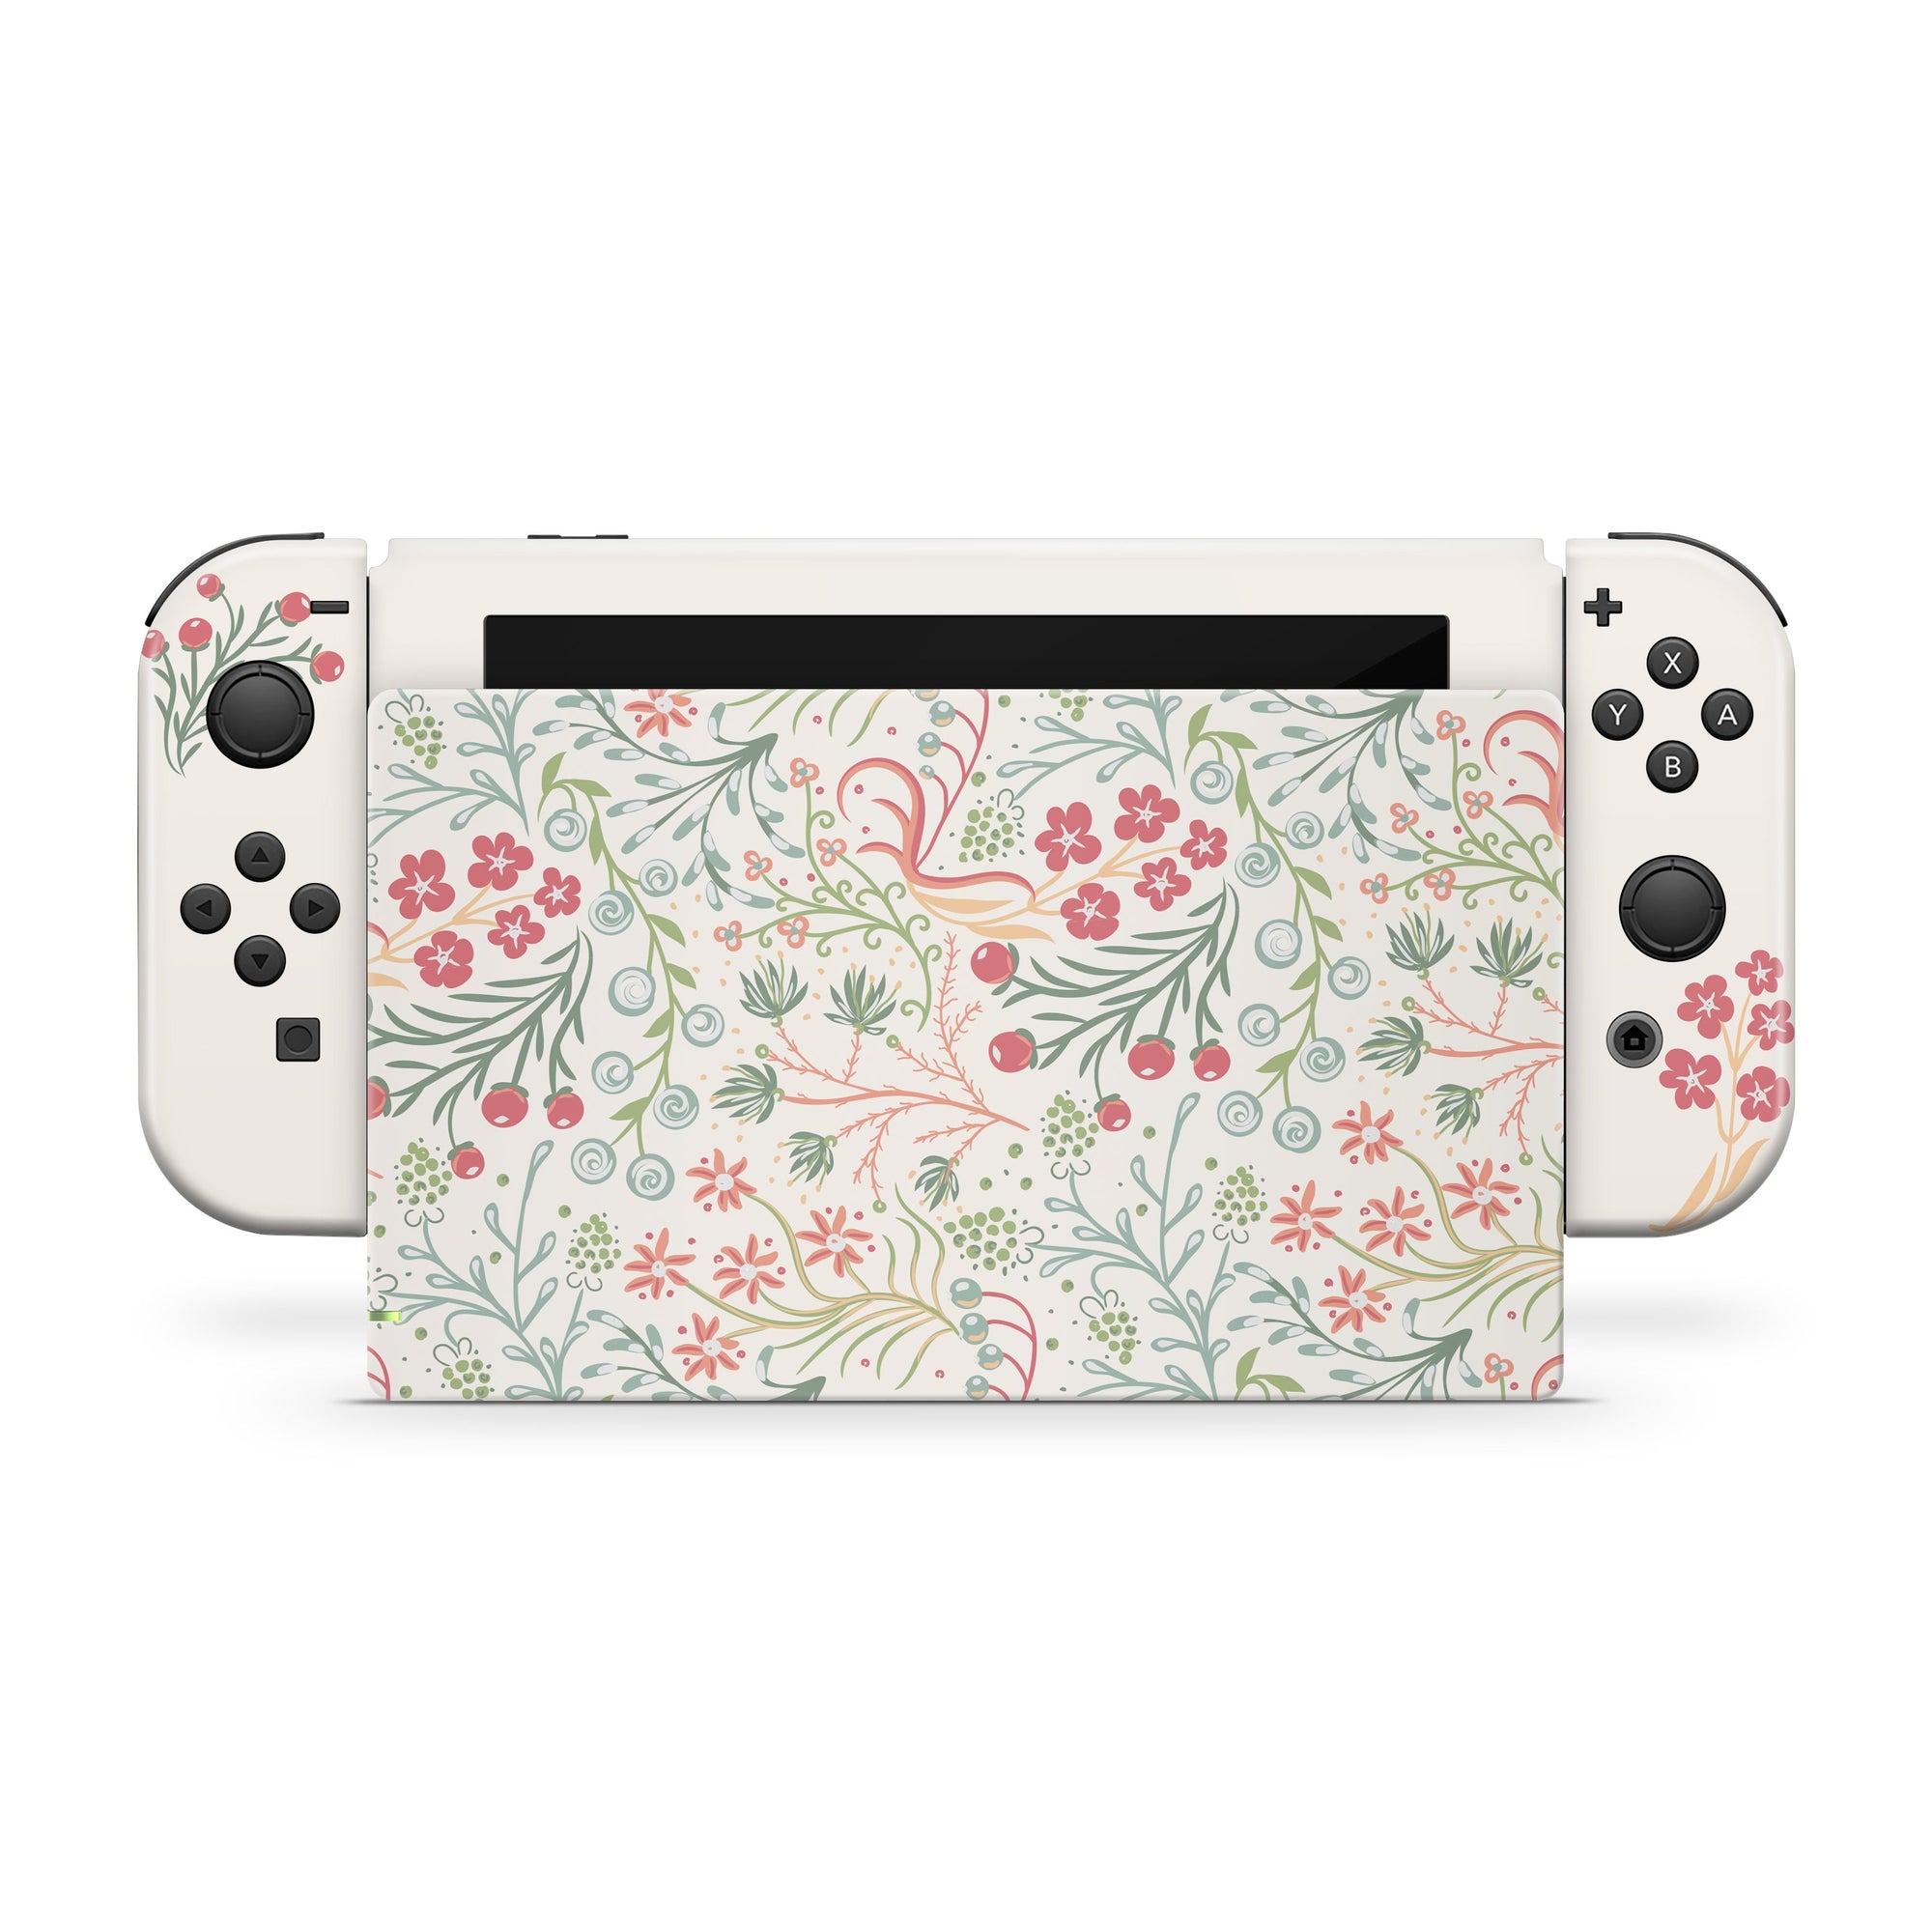 Nintendo switches skin Sakura, Cherries blossoms Flowers switch skin Full cover decal vinyl 3m stickers